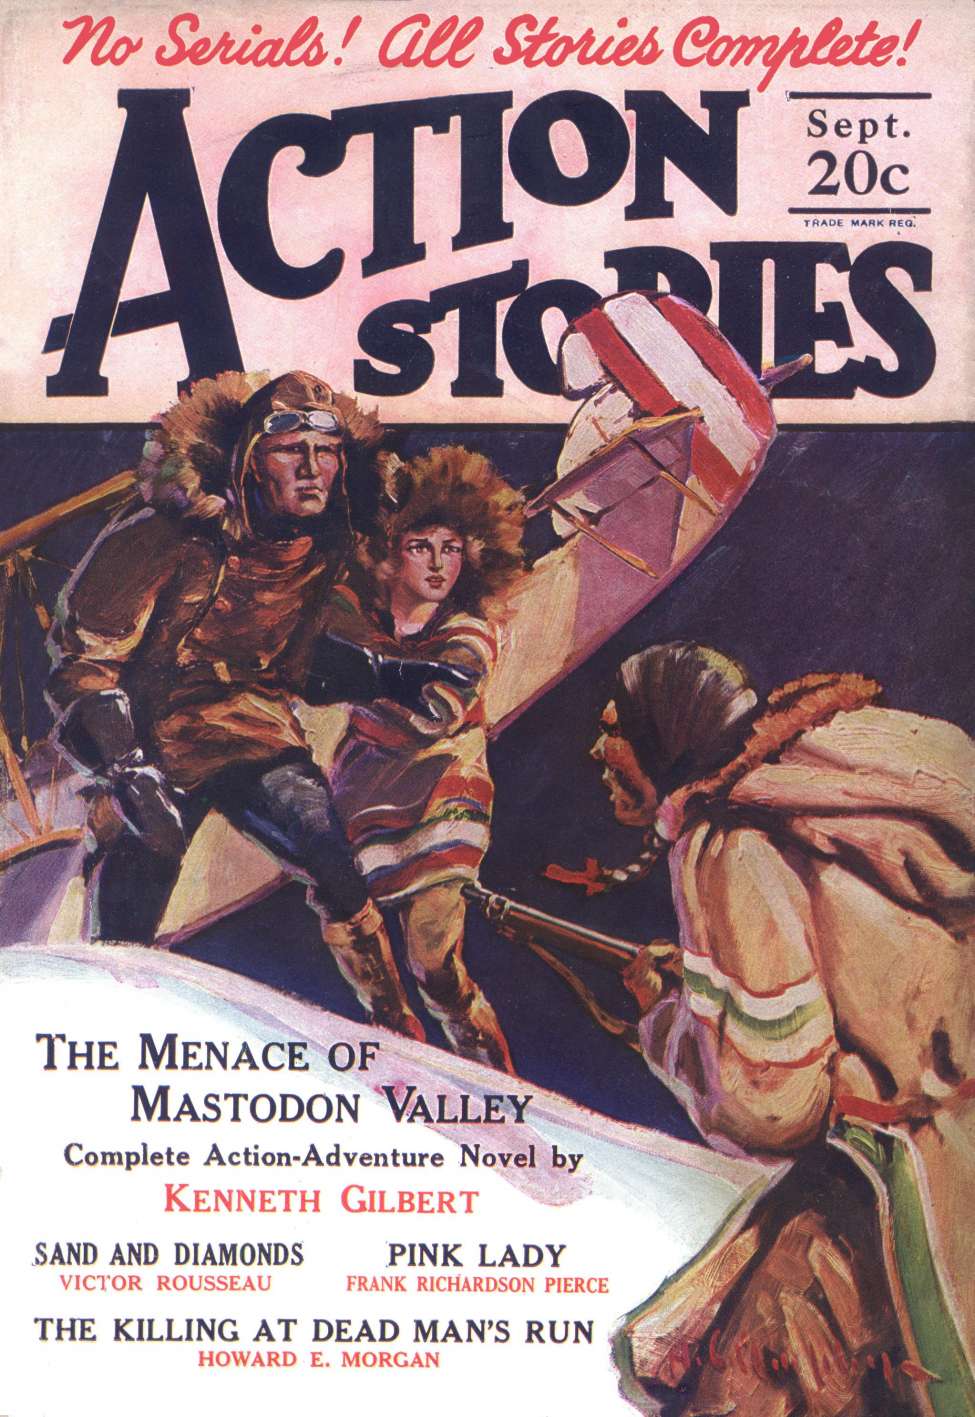 Book Cover For Action Stories v6 1 - The Menace Of Mastodon Valley - Kenneth Gilbert